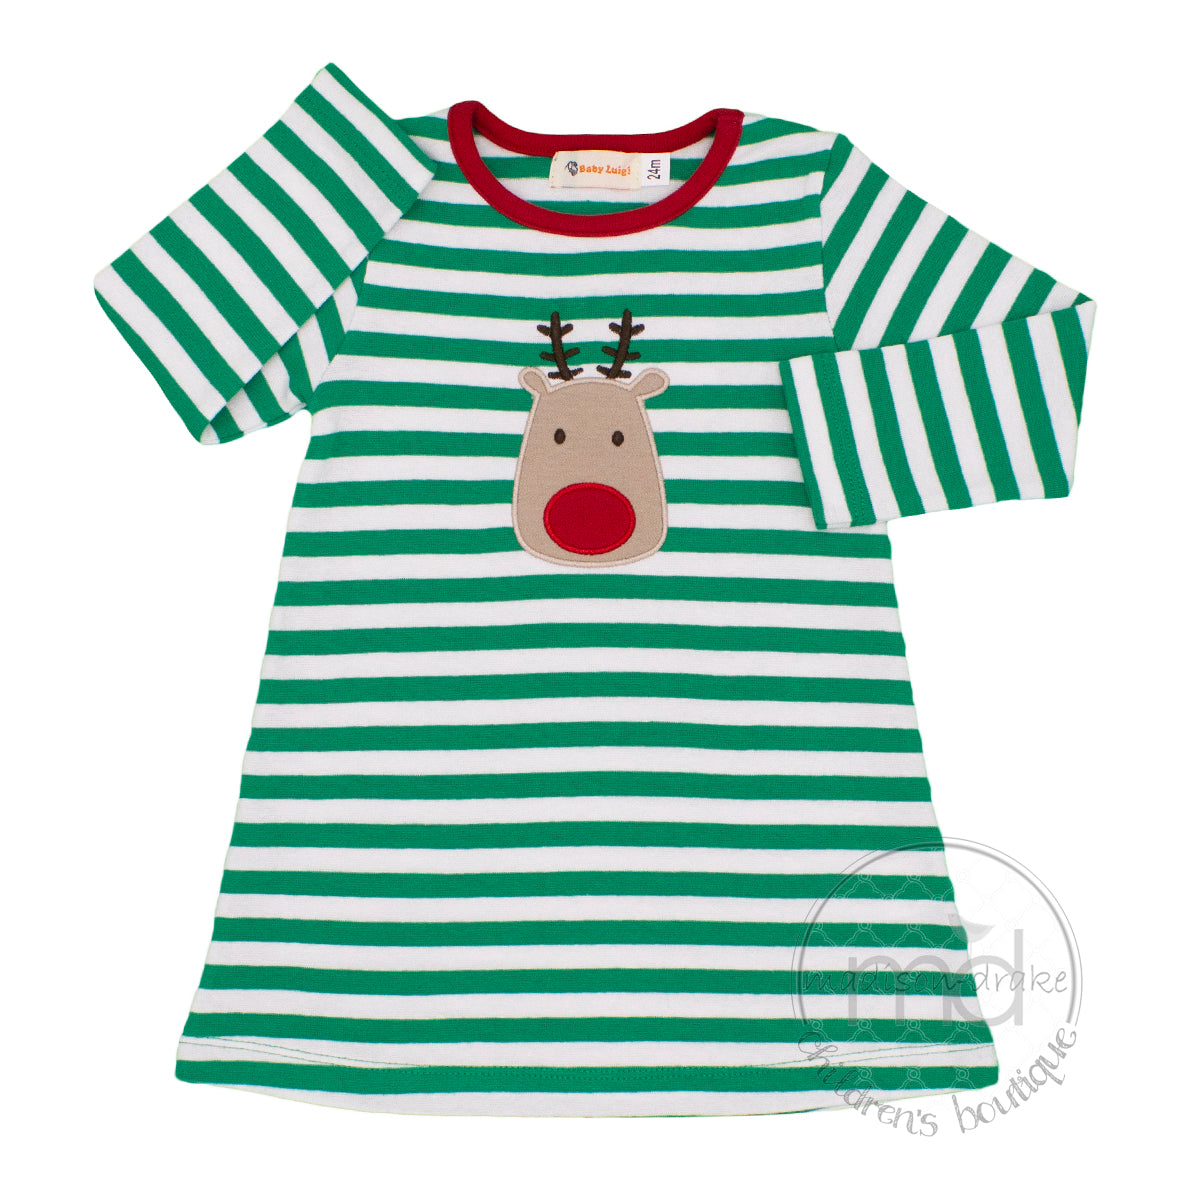 Toddler Girl's Reindeer Appliqued Christmas Dress by Luigi Kids